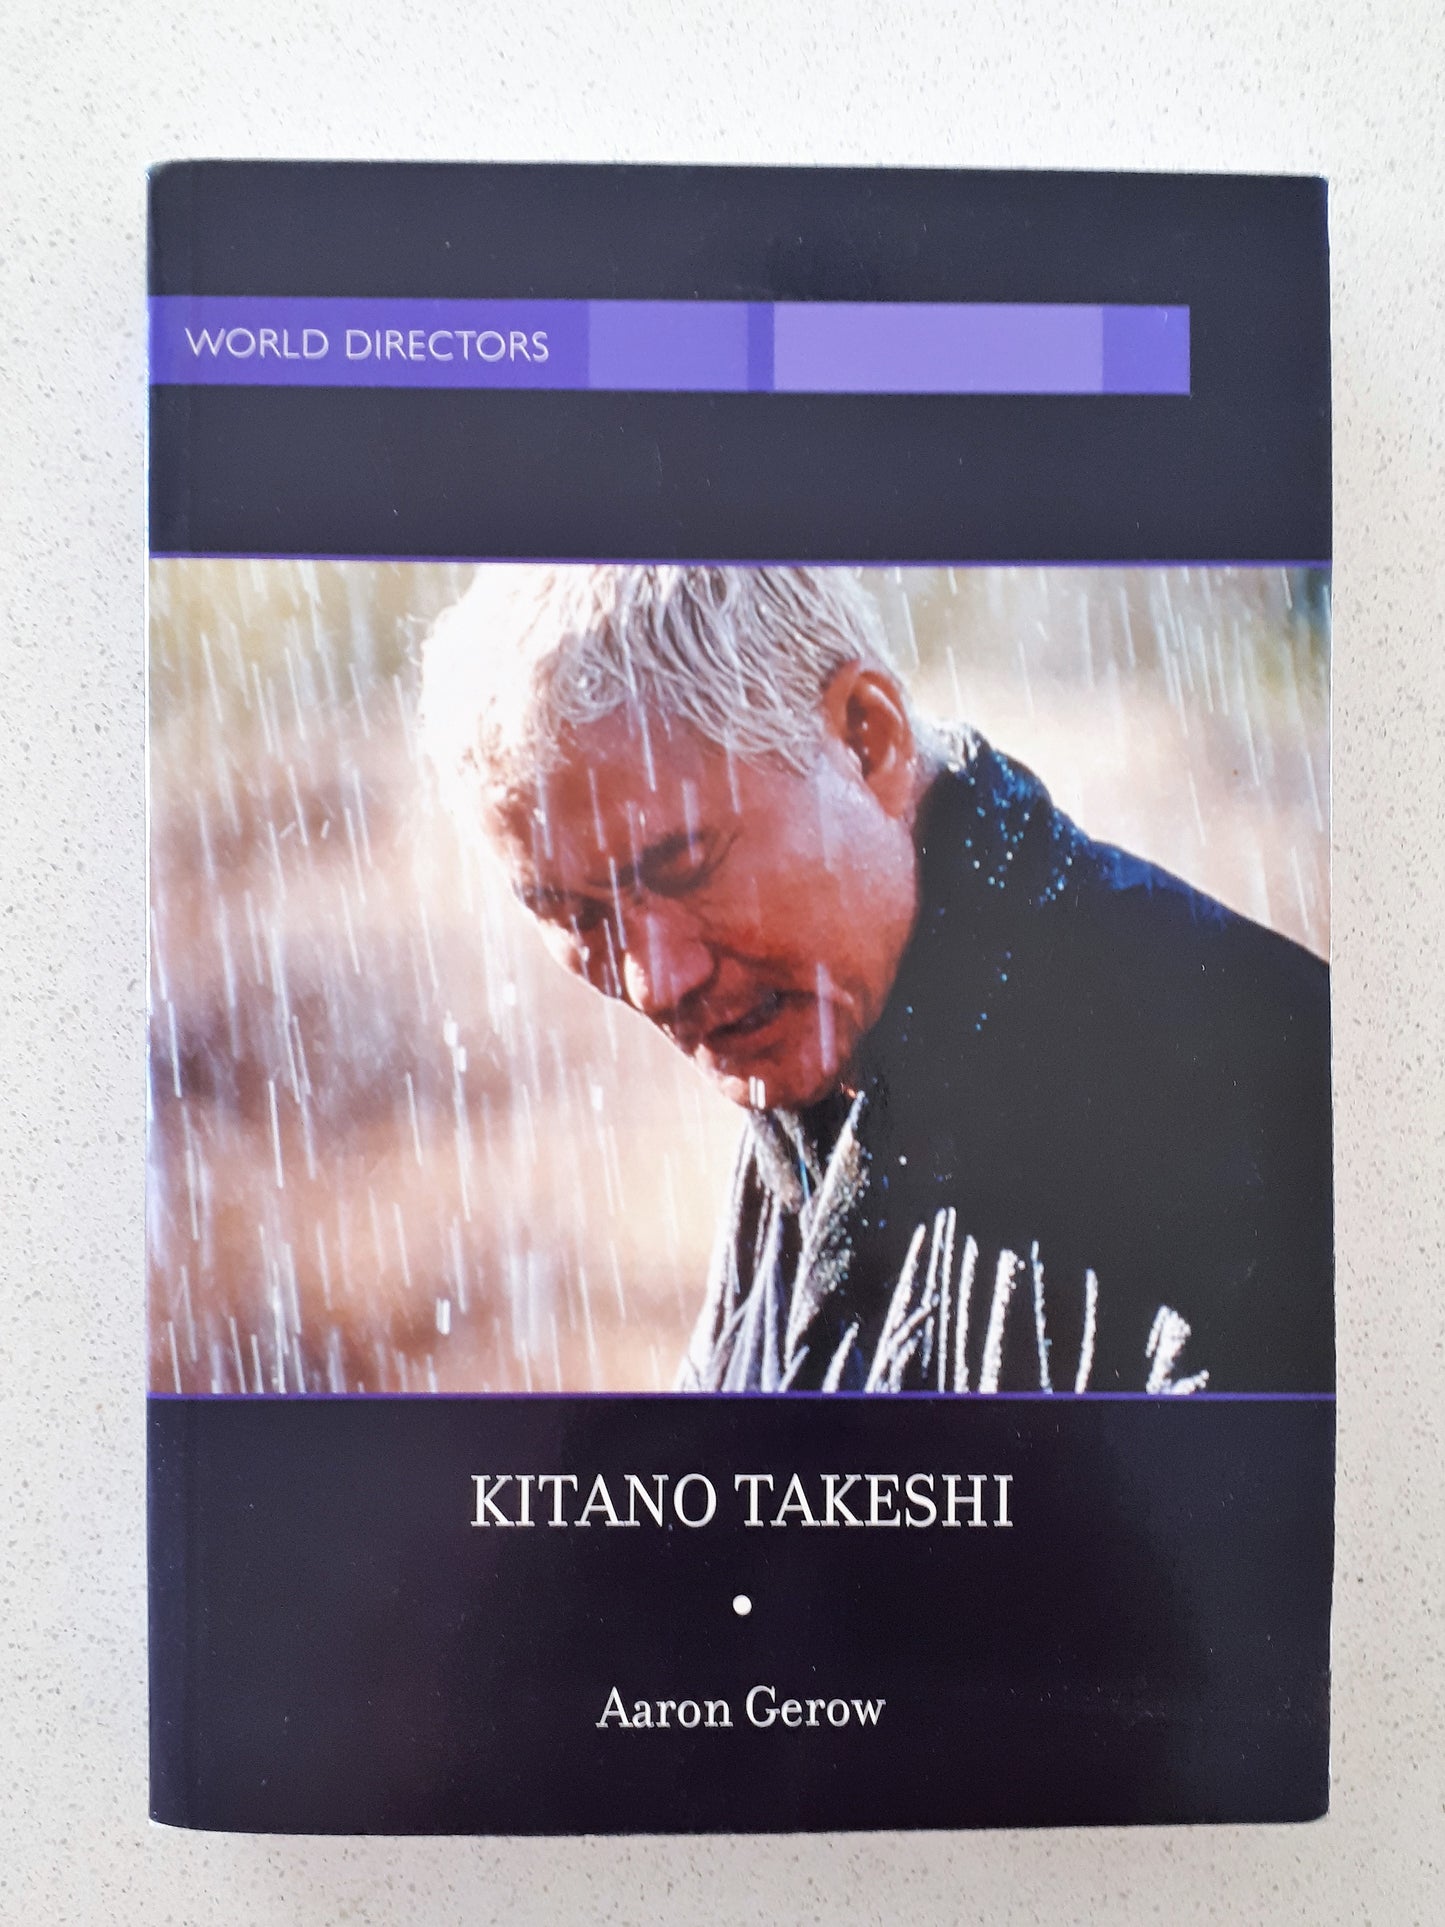 Kitano Takeshi by Aaron Gerow